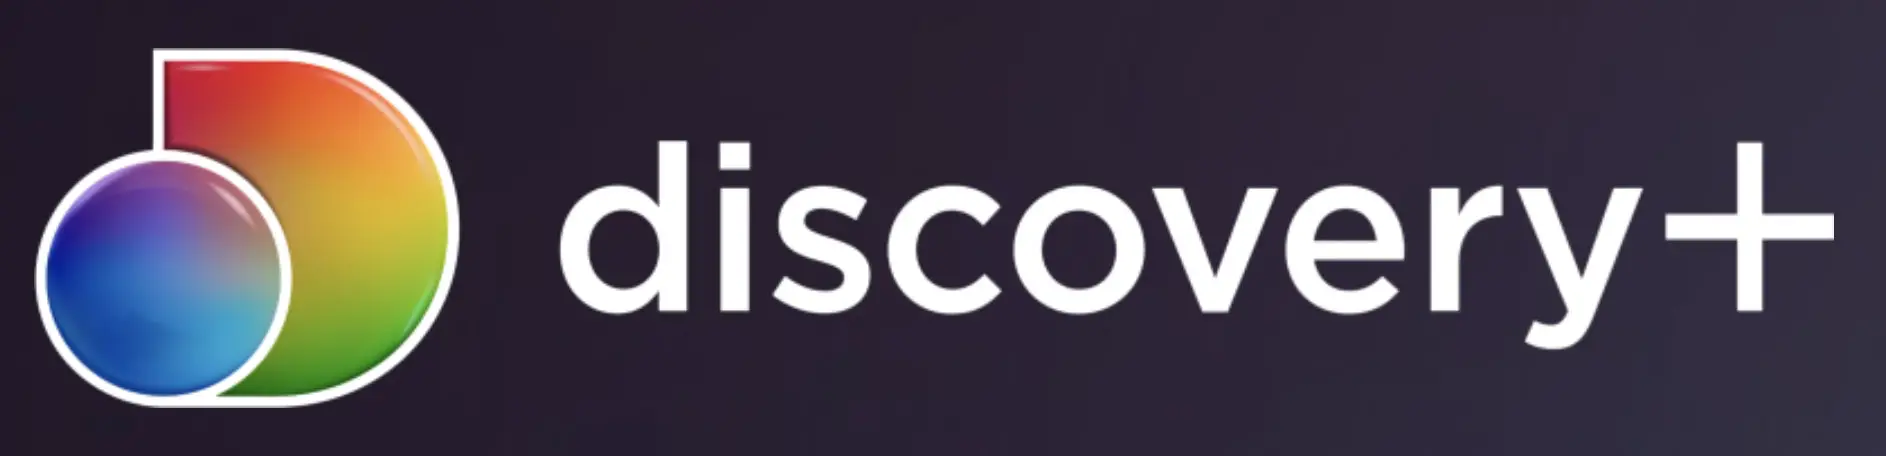 discovery-plus-logo-on-dark-blue